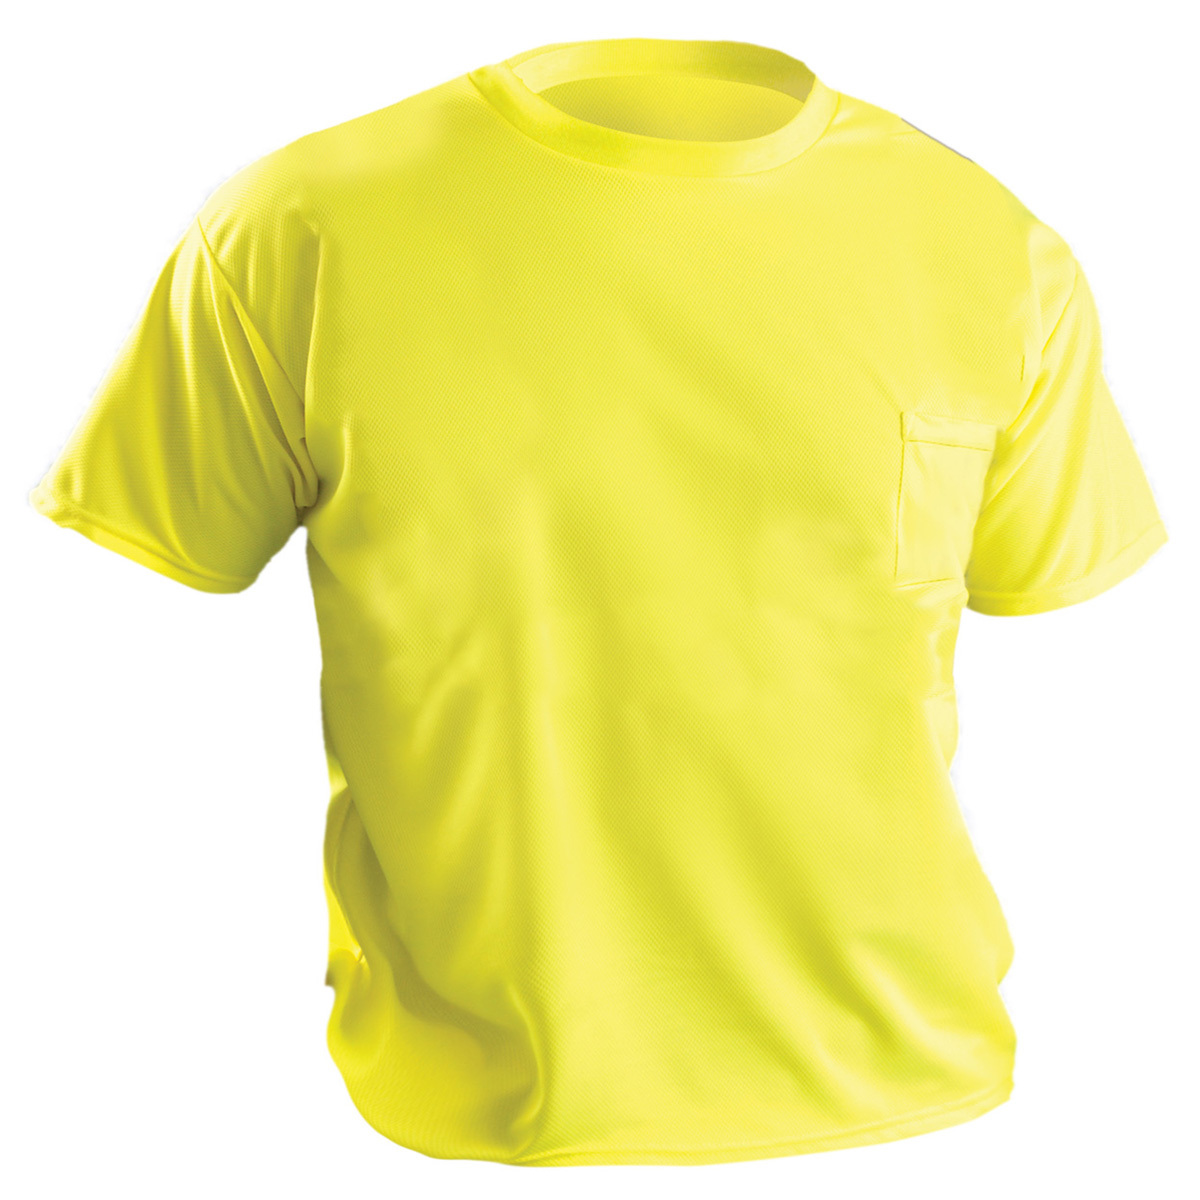 OccuNomix Small Yellow Pocket Shirt